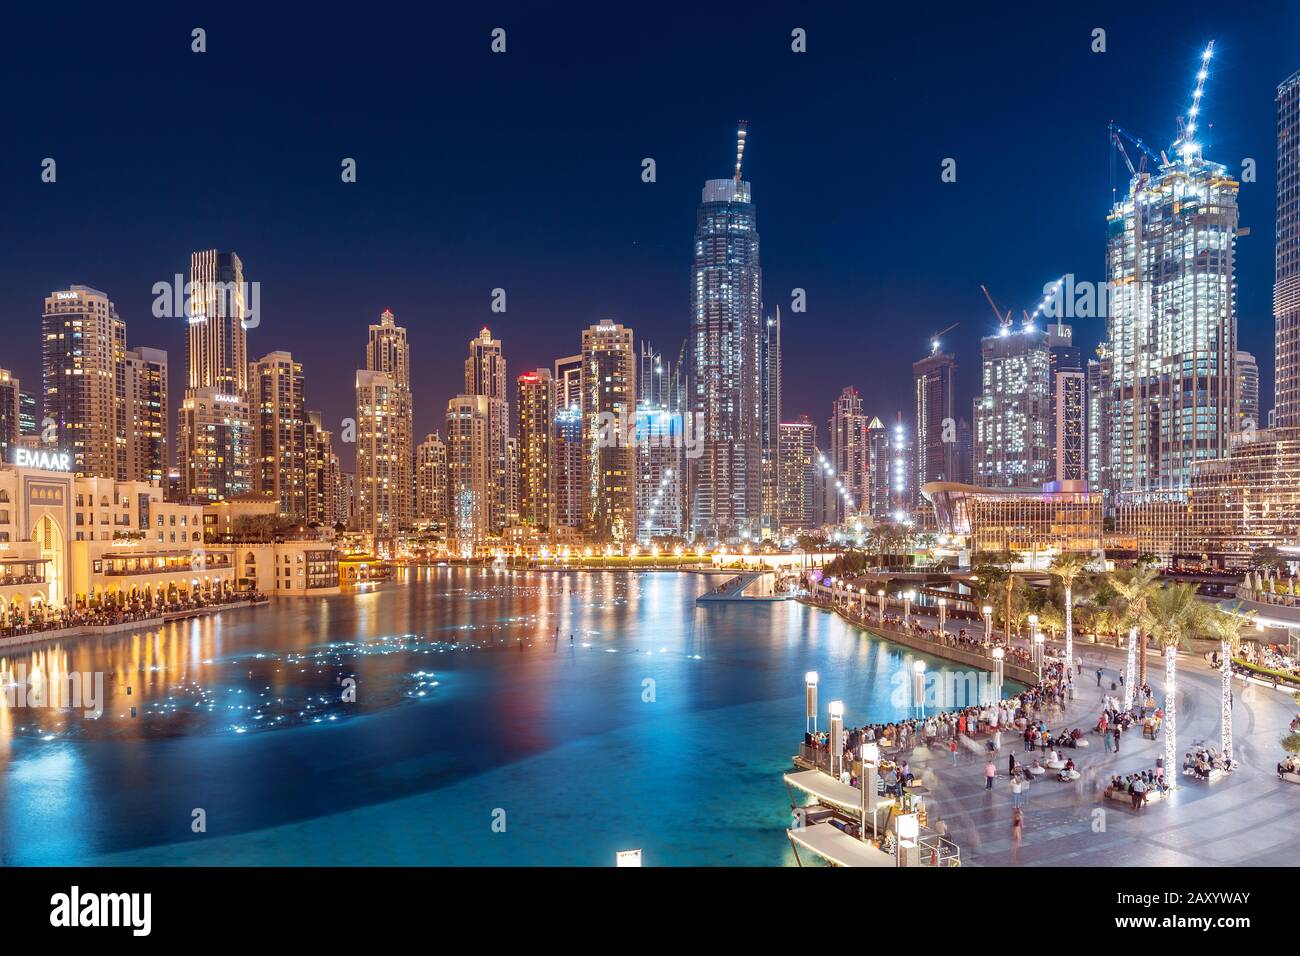 26 November 2019, UAE, Dubai: Louis Vuitton store in Dubai Mall, panoramic  view Stock Photo